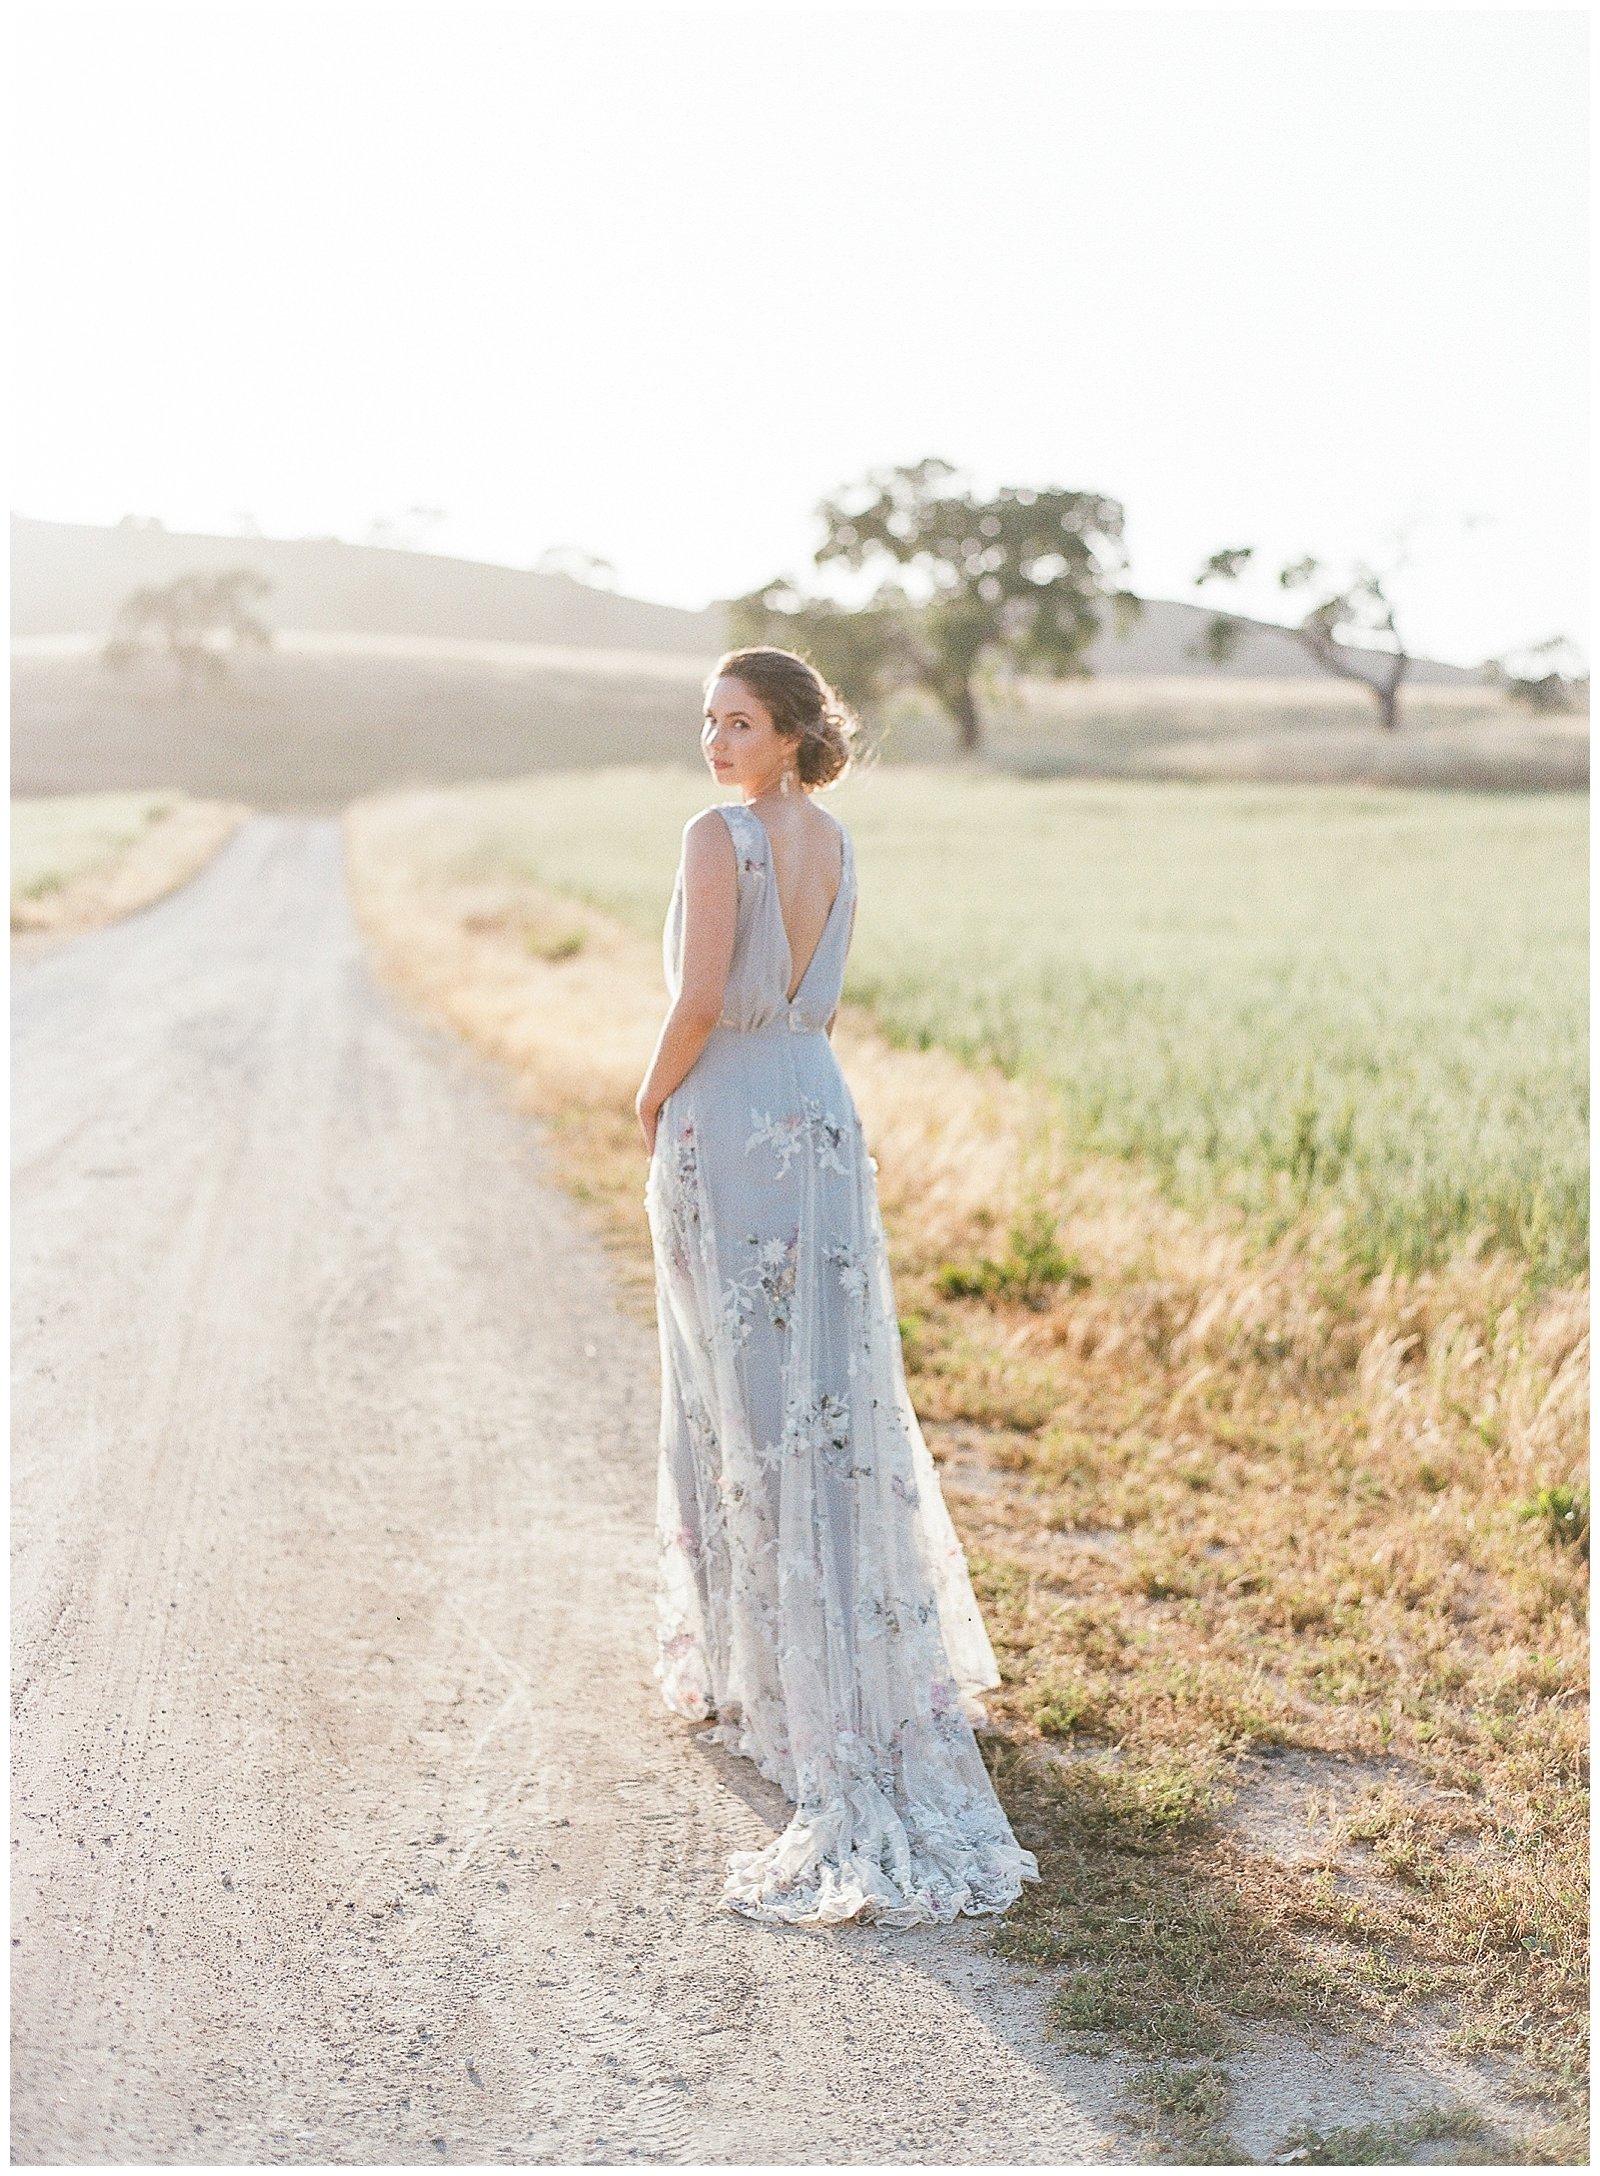 Kate McDonald Blue wedding dress at Kestrel Park Wedding || The Ganeys